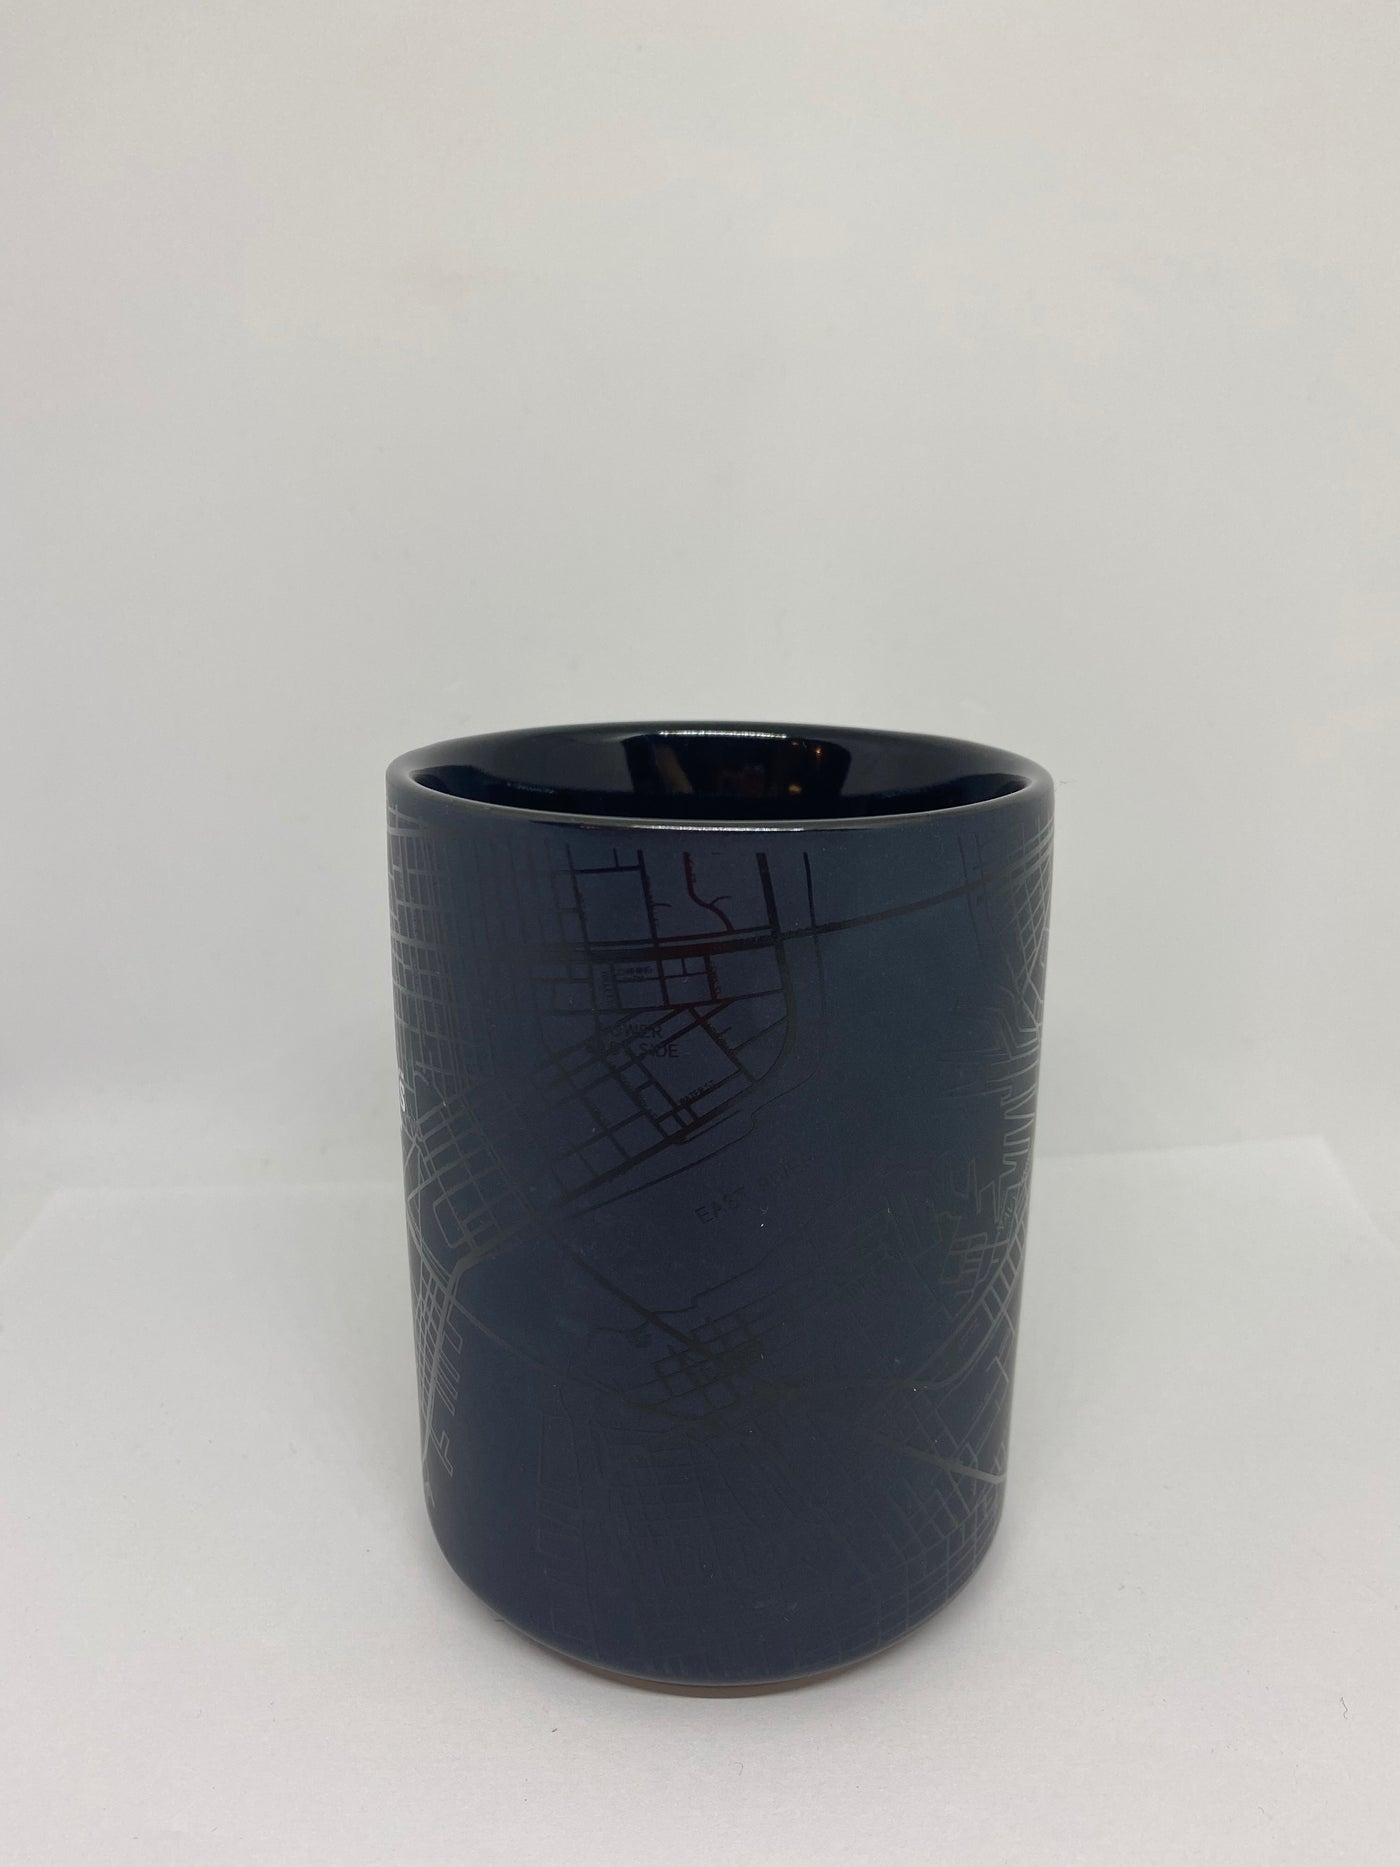 M&M's World New York City Black Map Ceramic Coffee Mug New